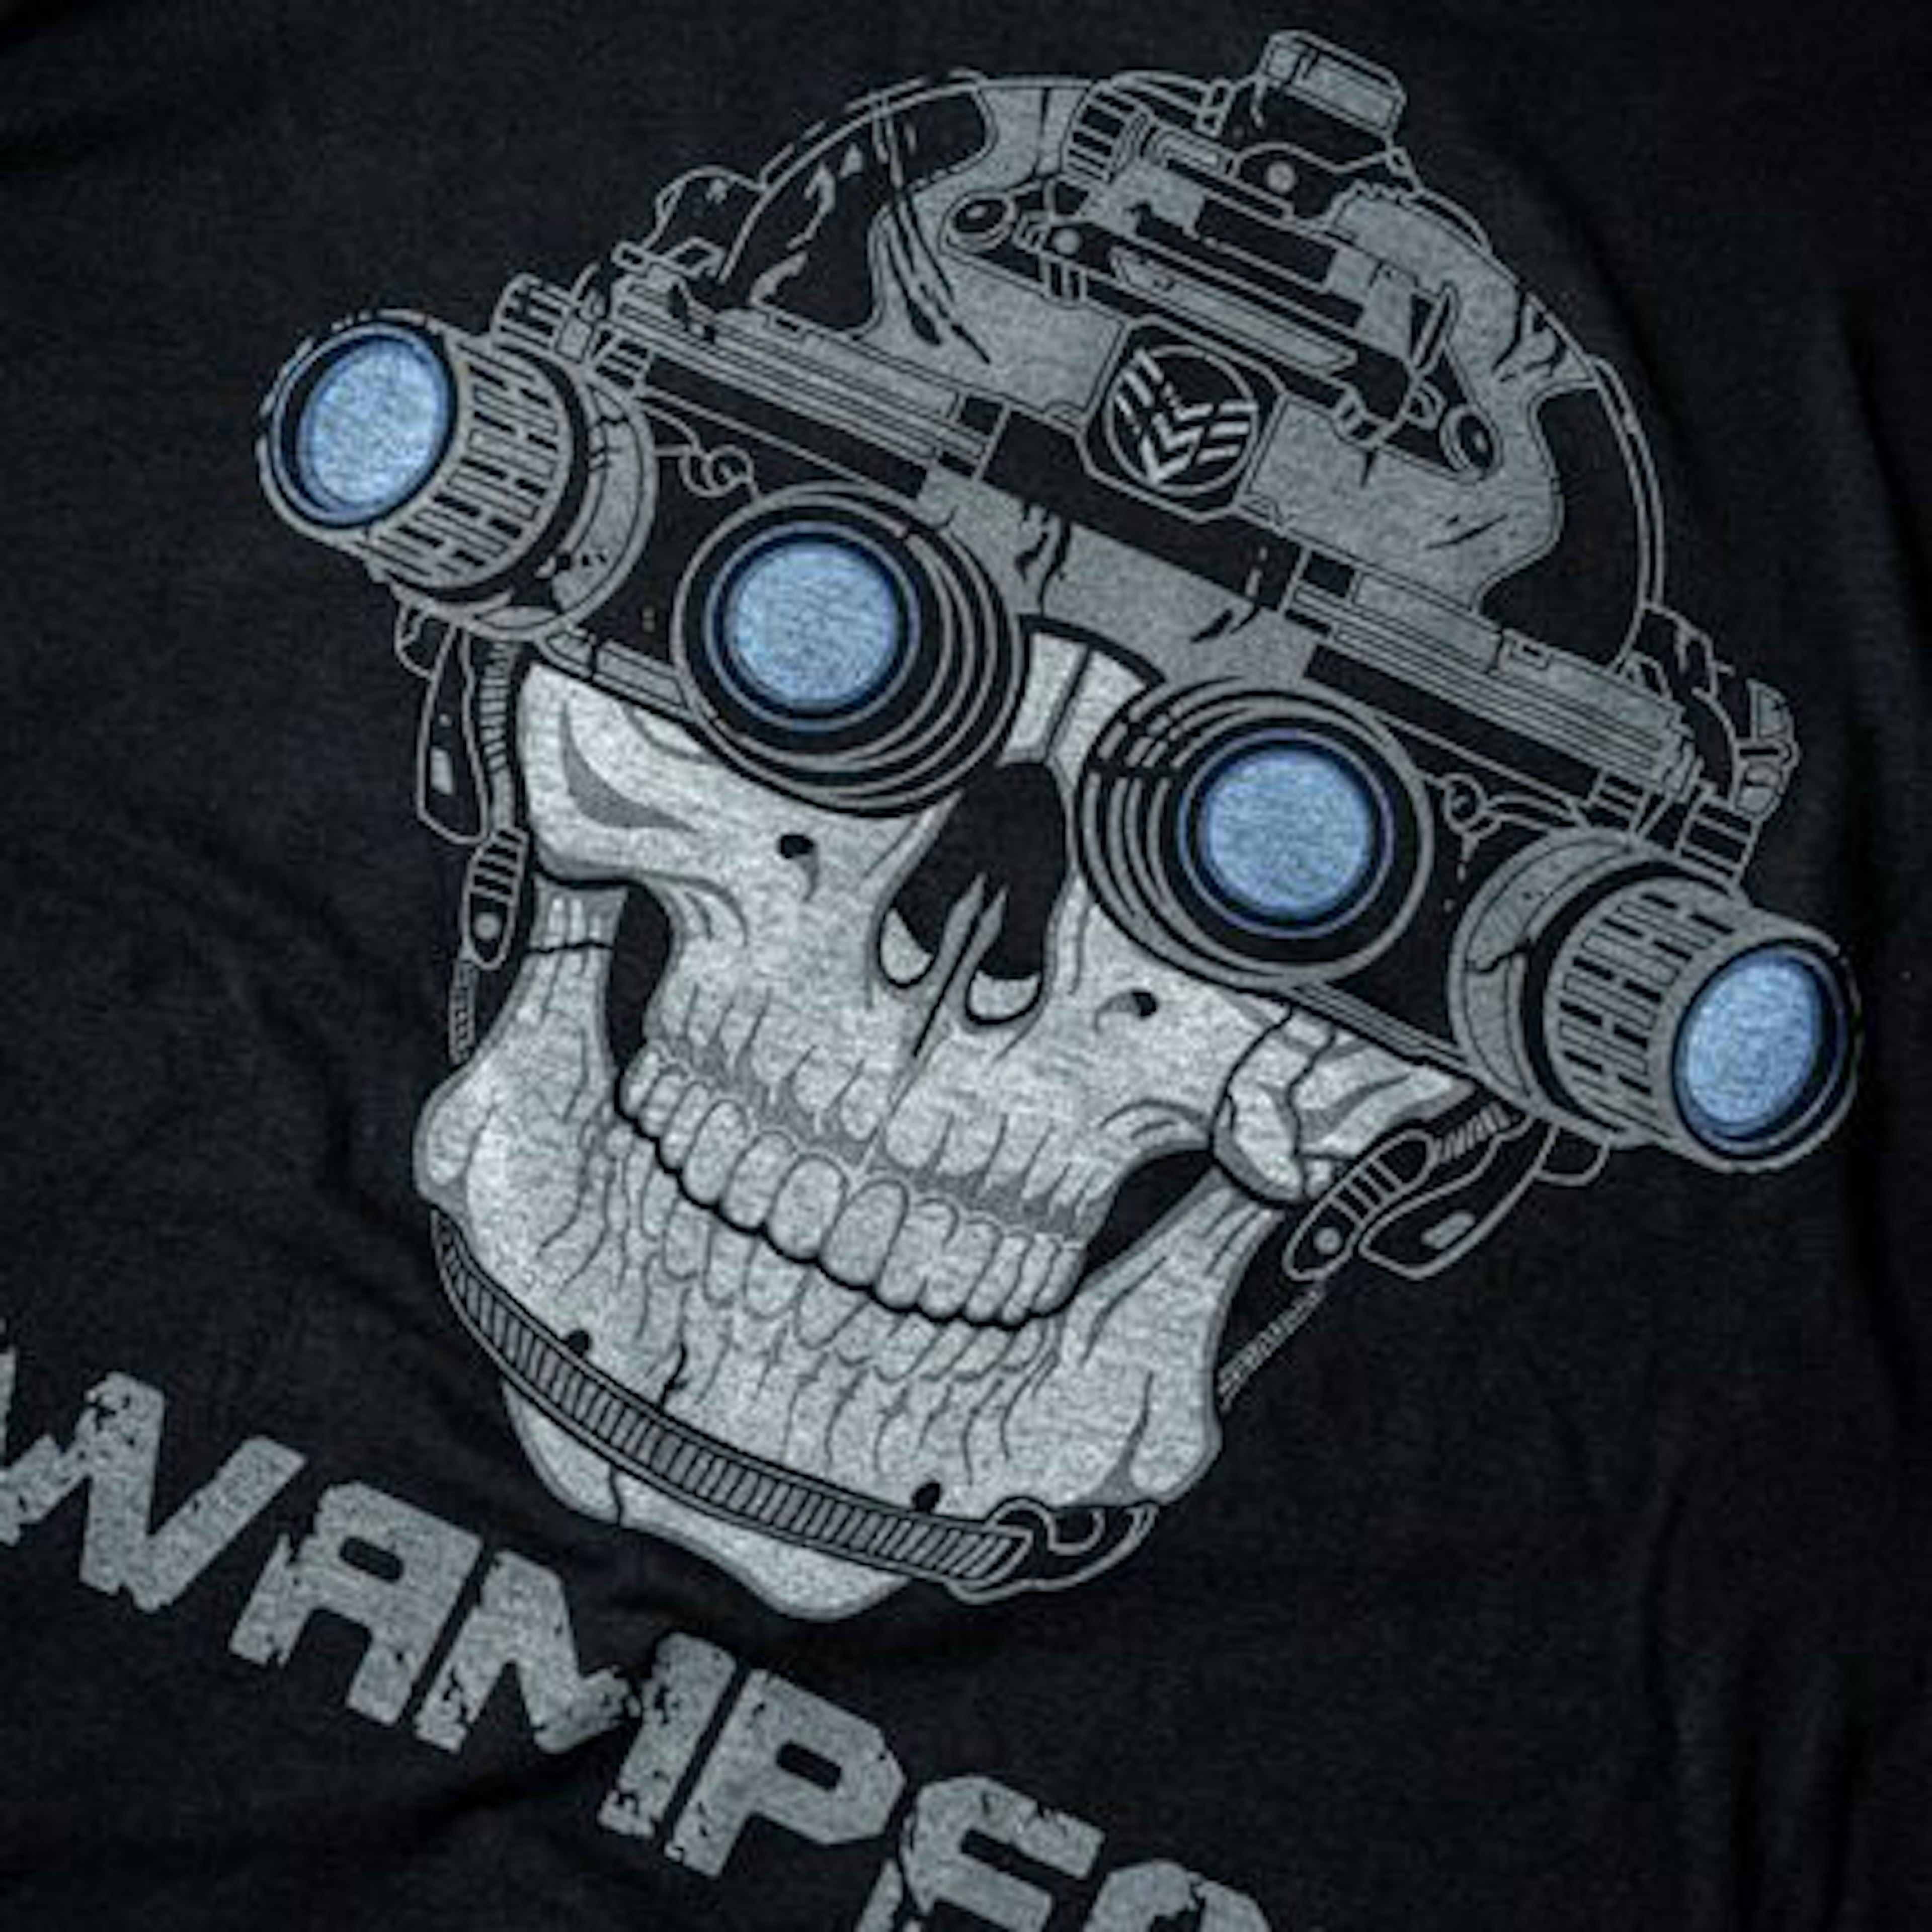 Look Good, Shoot Good: 3 New Swampfox Shirts